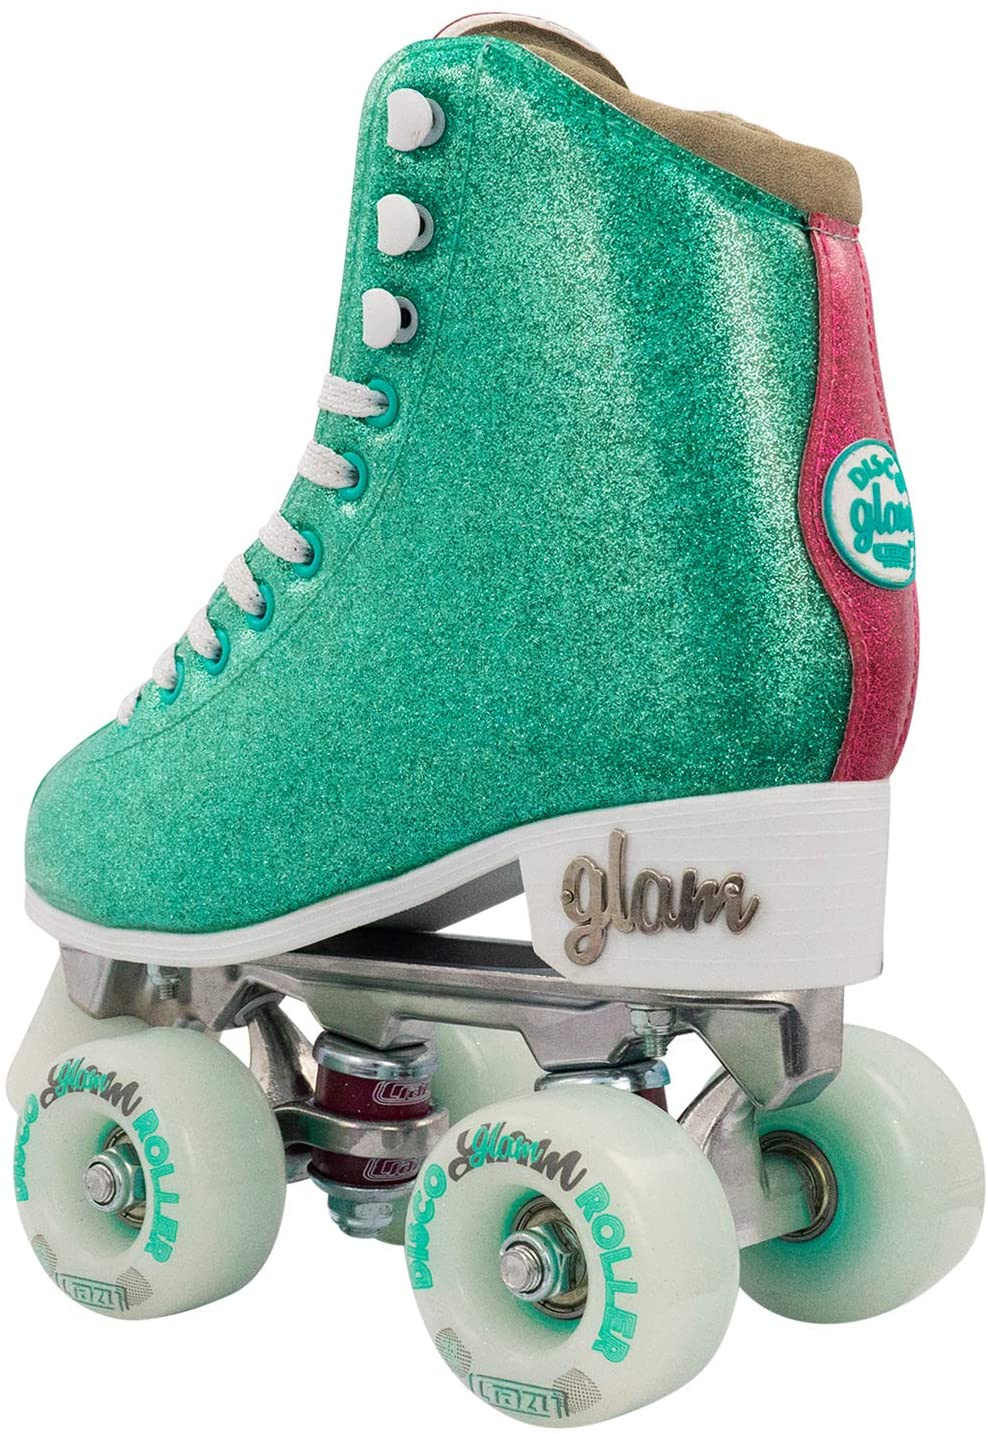 UK – 8, 10, 12, 14 BTFL Skates for Ladies and Girls/Disco Roller/Roller Skates Trends Coco